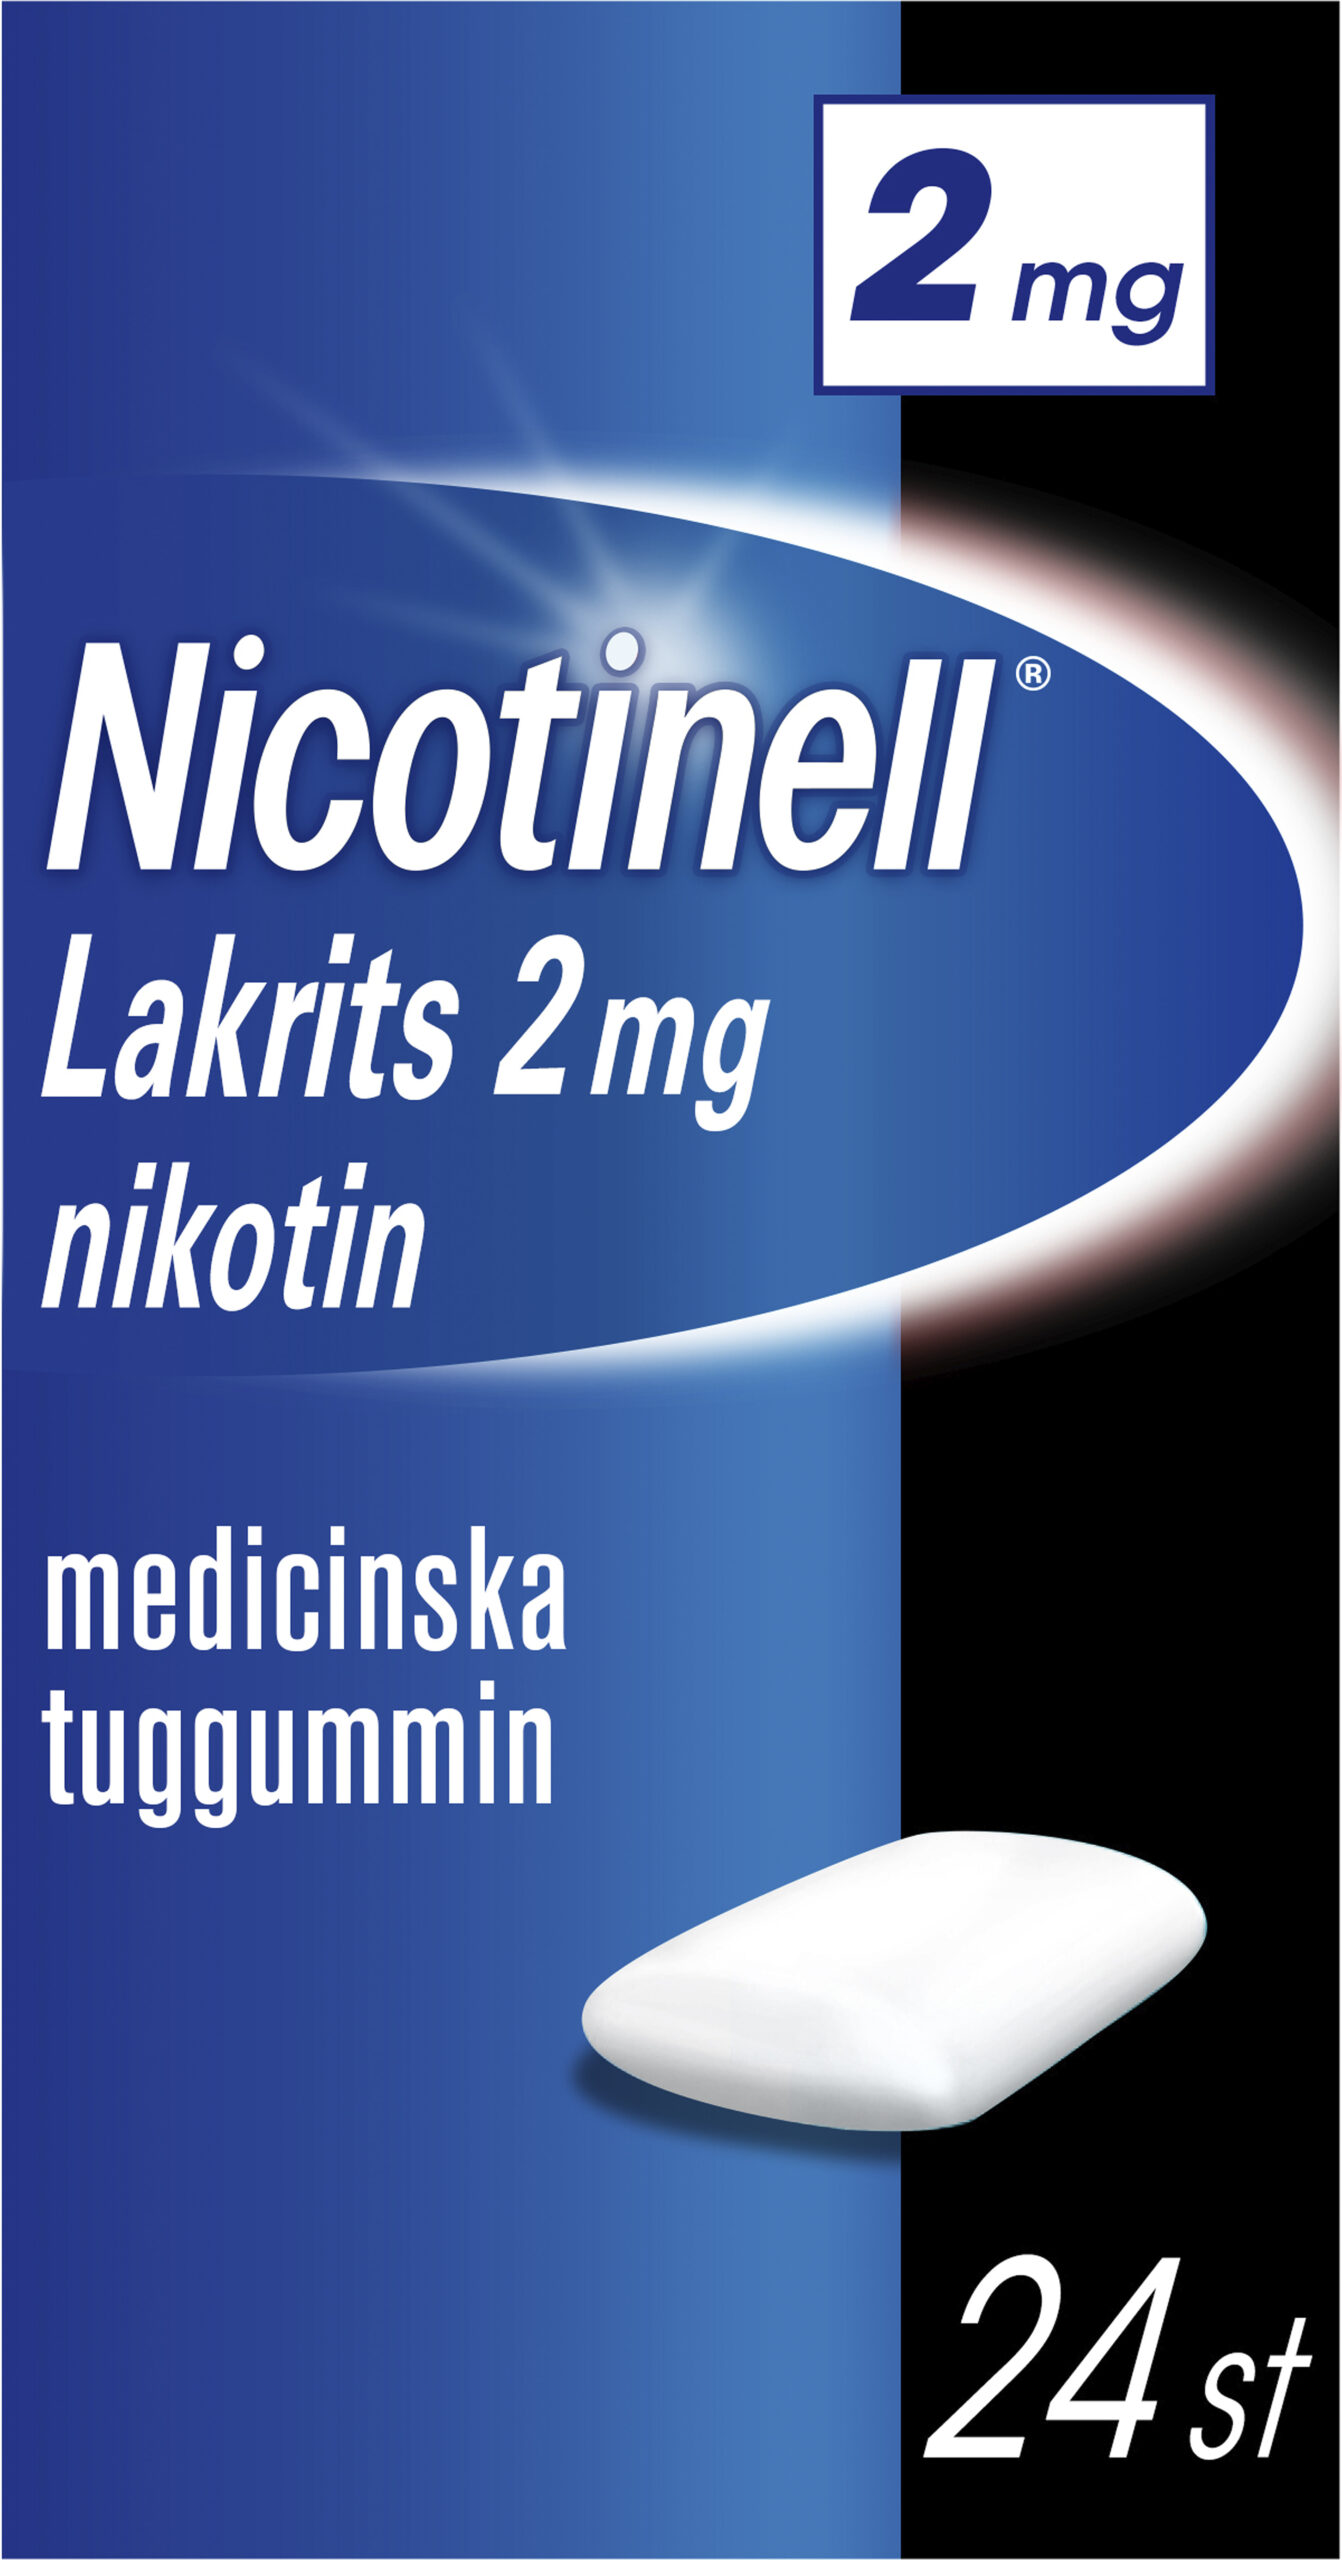 Nicotinell Lakrits Medicinskt tuggummi 2mg Blister, 24tugggummin